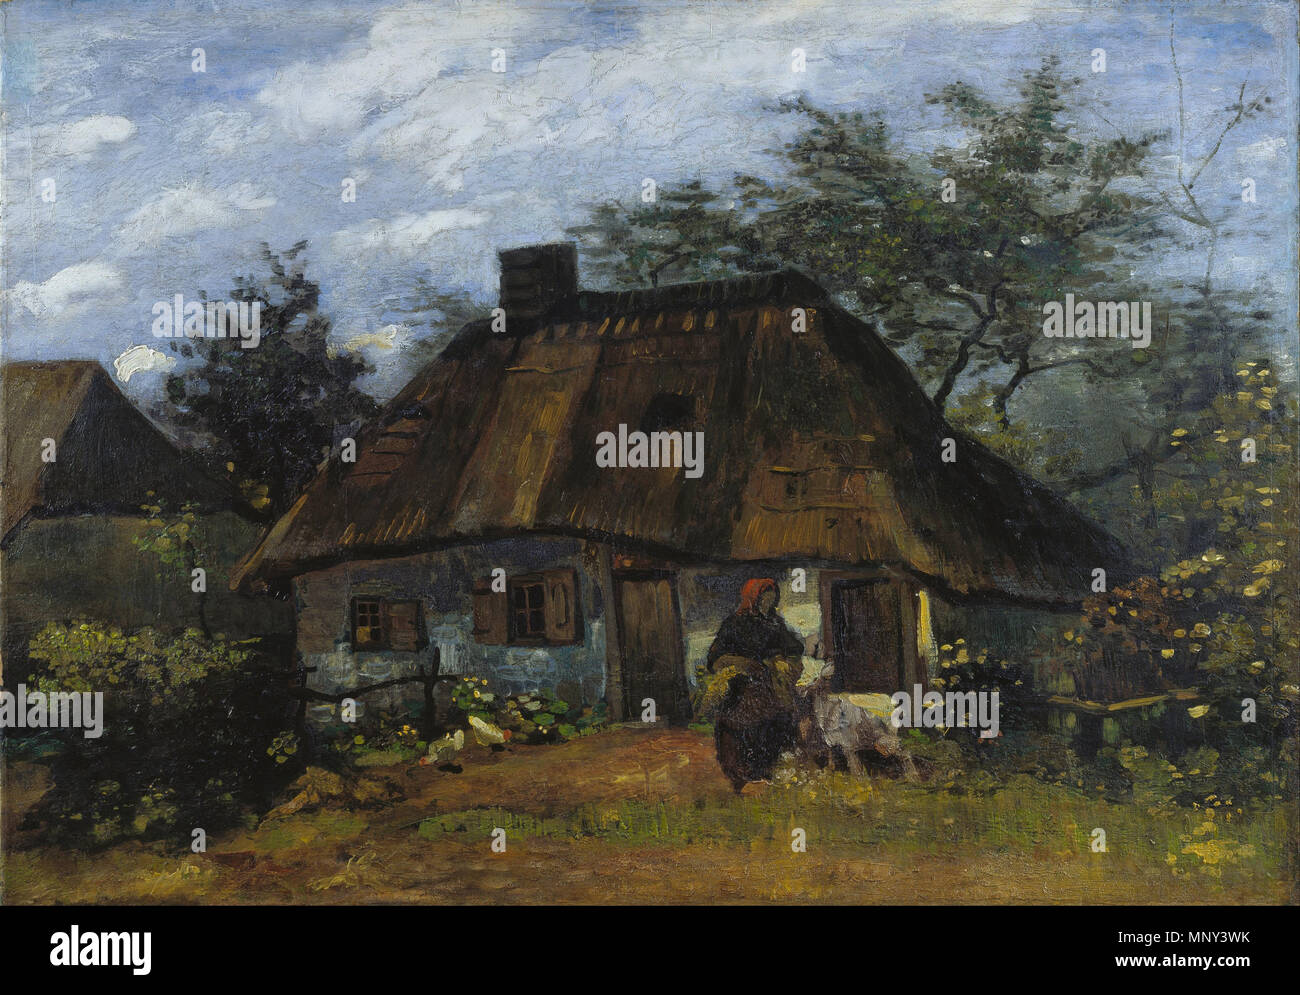 Cottage and Woman with Goat / Farmhouse in Nuenen (La Chaumiére)   Nuenen, June 1885 - July 1885.   1223 Vincent van Gogh - Farmhouse in Nuenen - Google Art Project Stock Photo